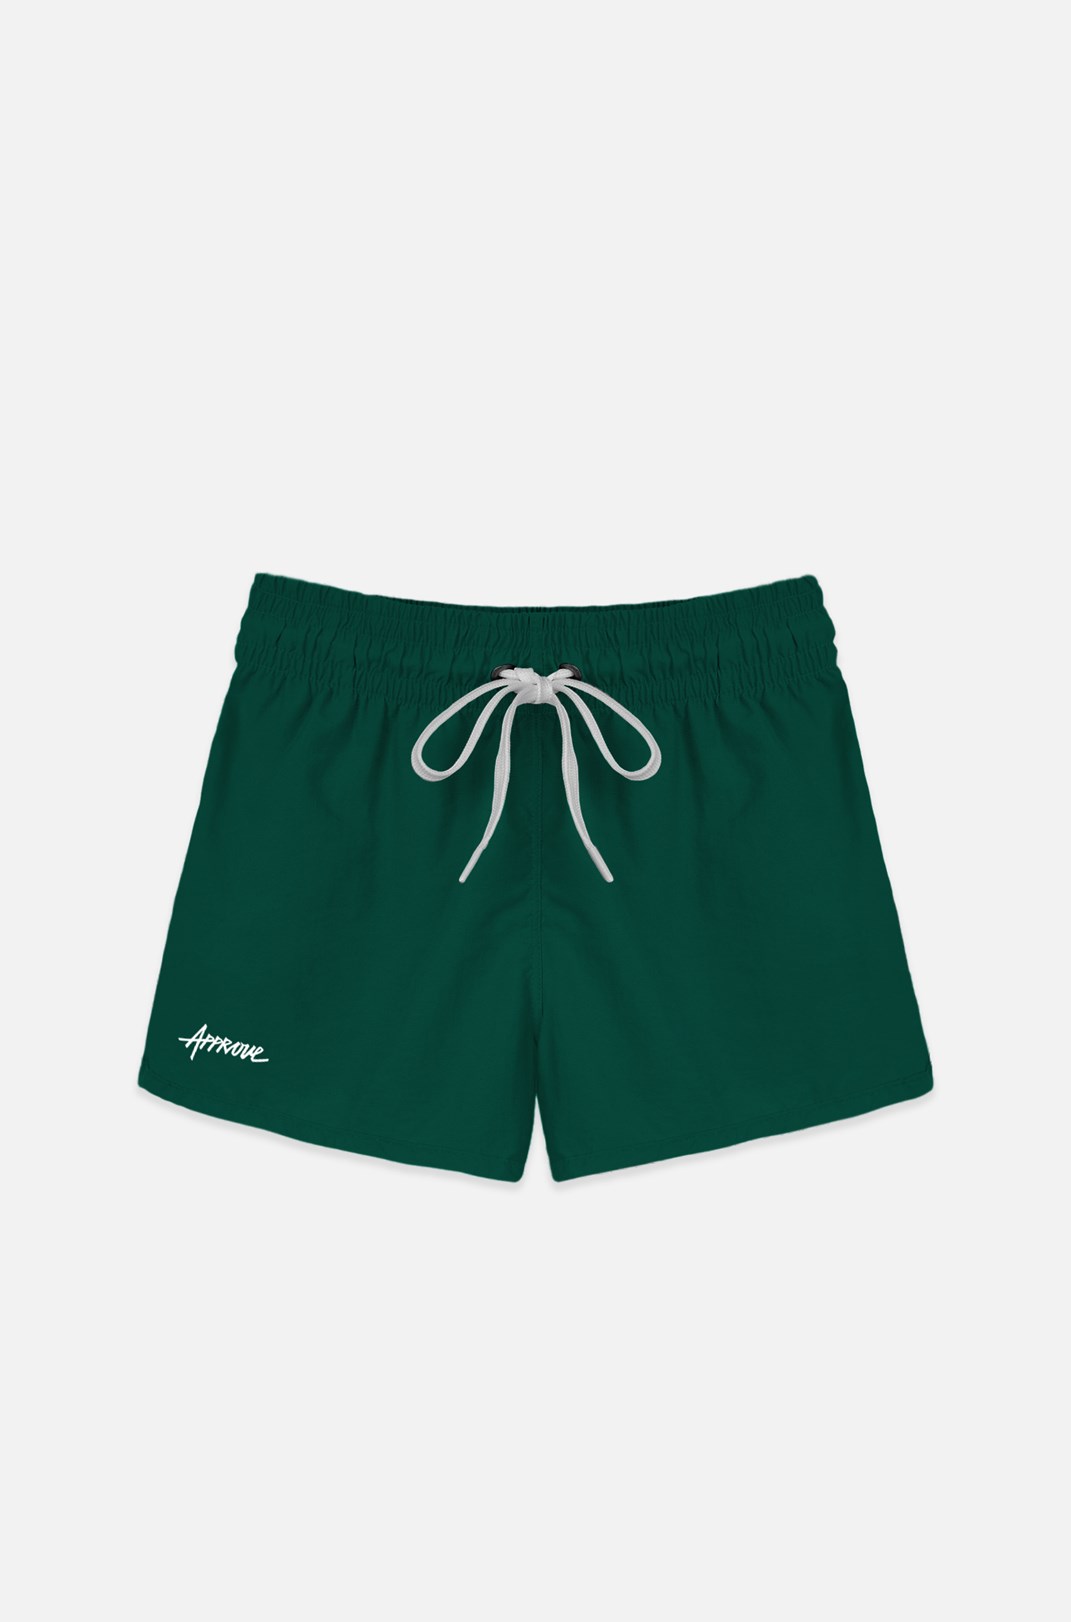 Shorts Approve Verde Escuro